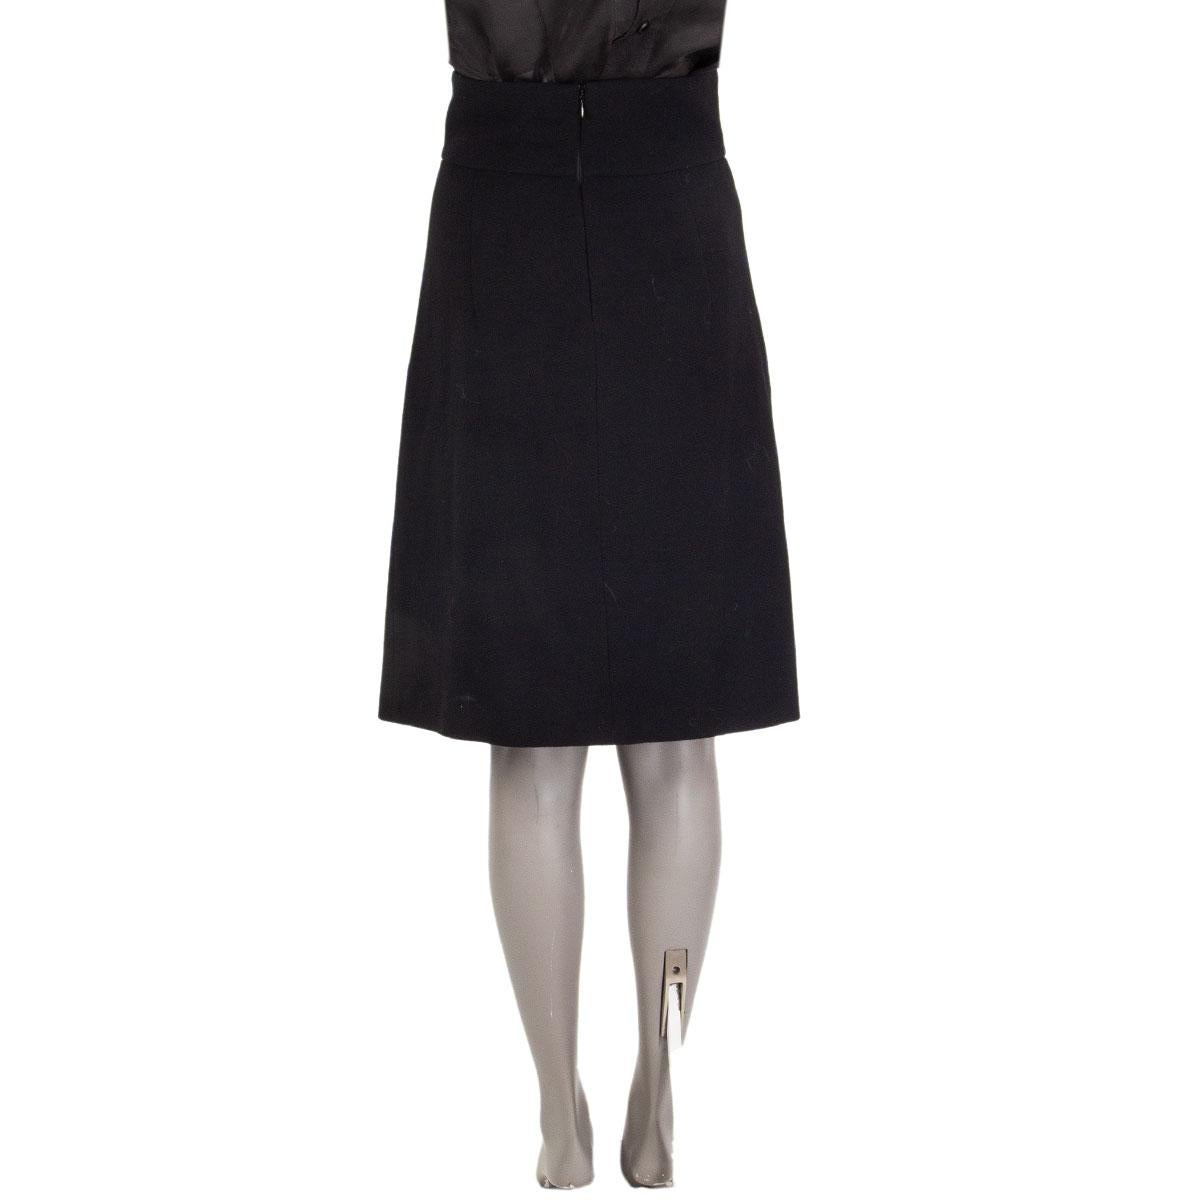 black wool skirt knee length